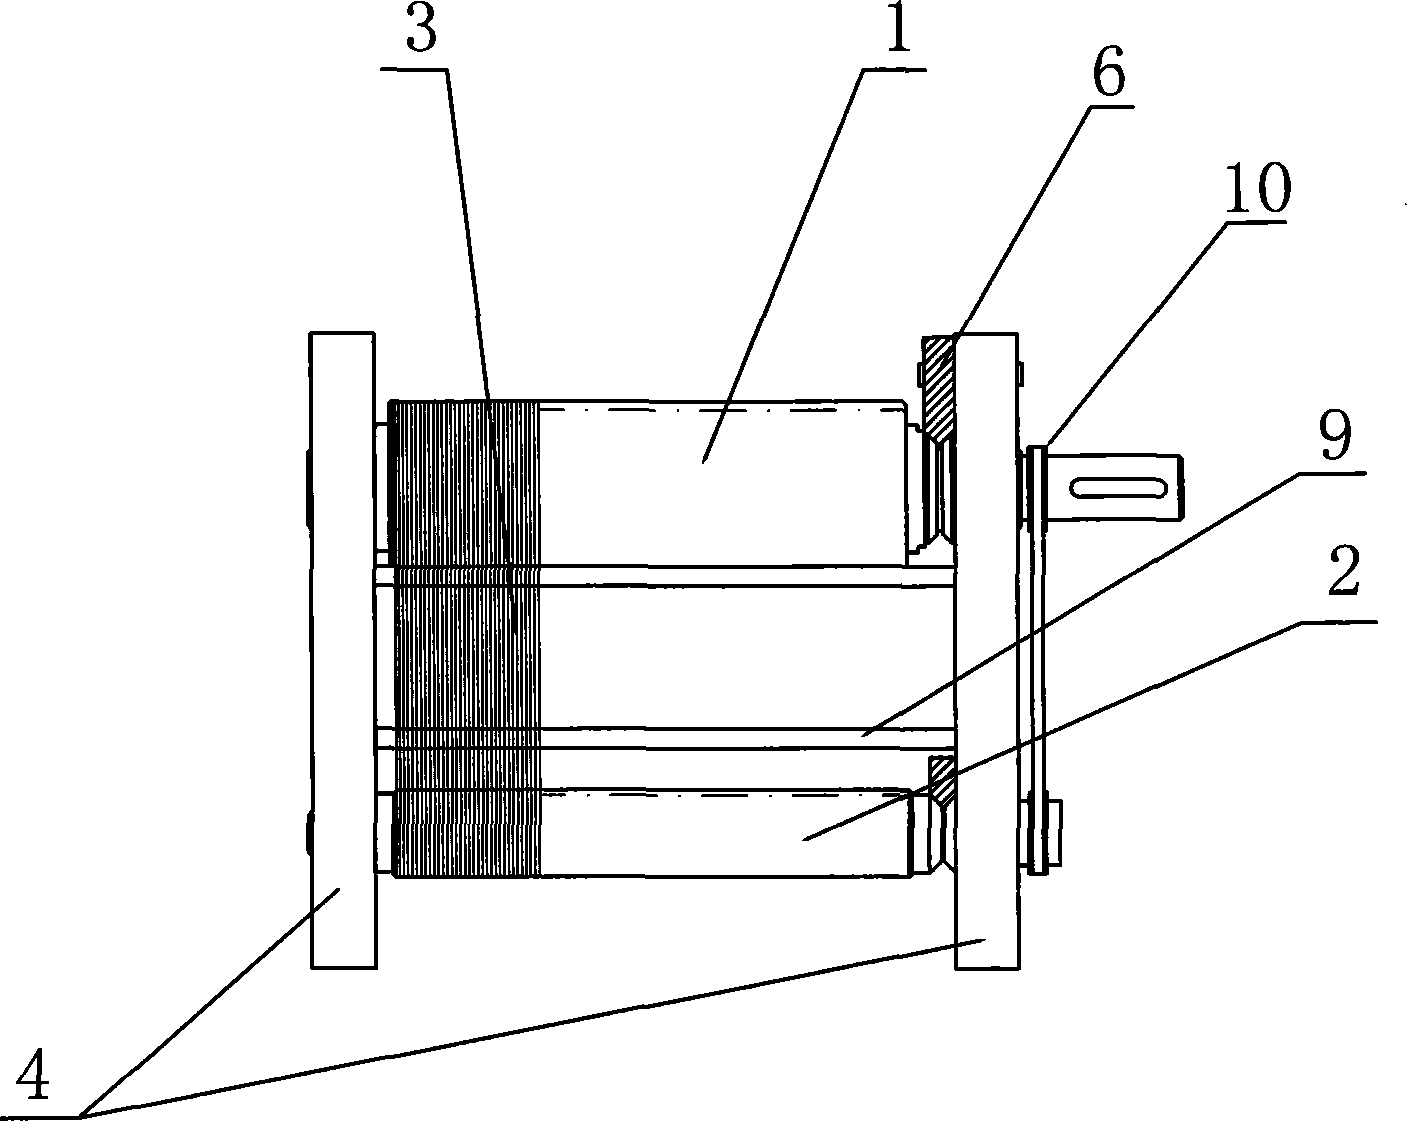 Cutting assembly of wafer line cutting machine